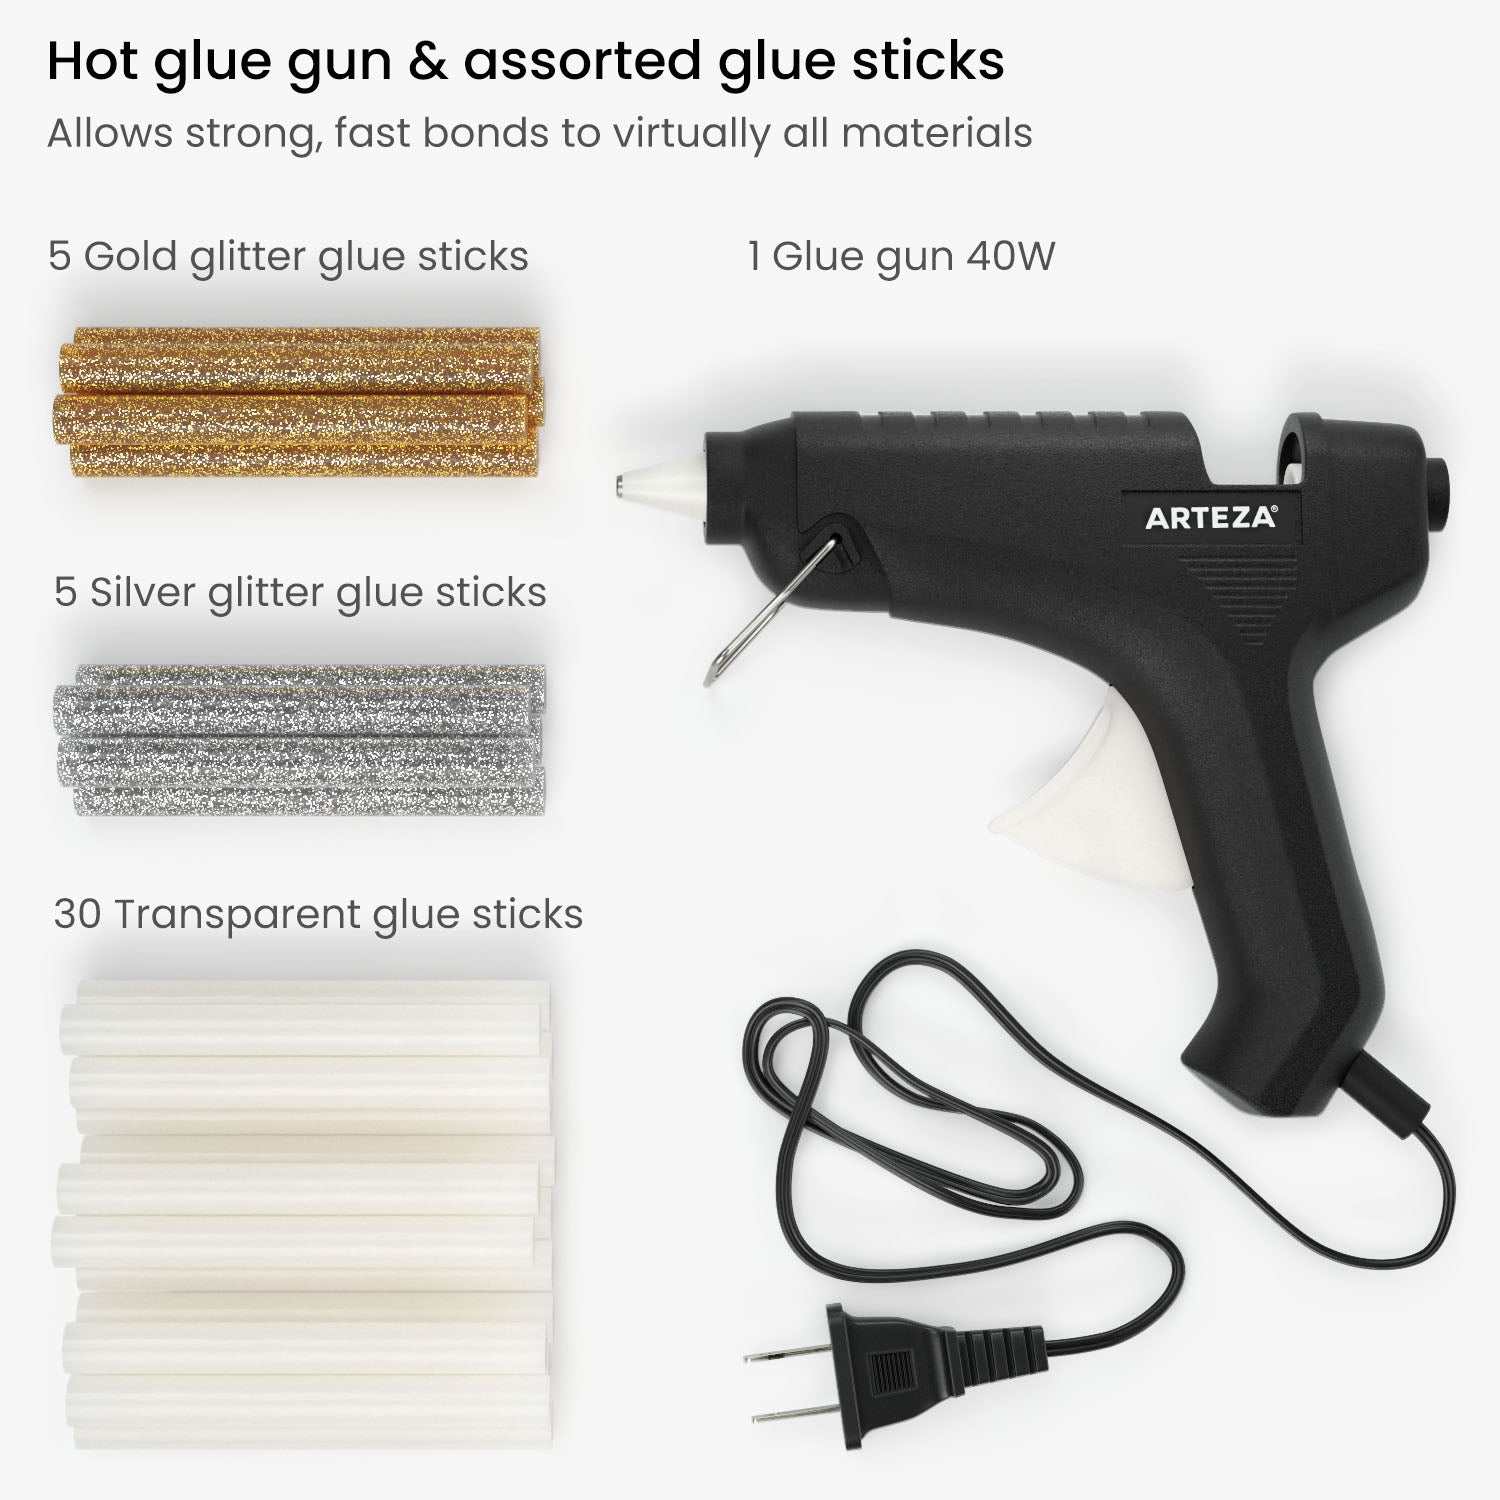 6 Pcs Mini Hot Glue-gun Compatible With Class Project, Small Glue